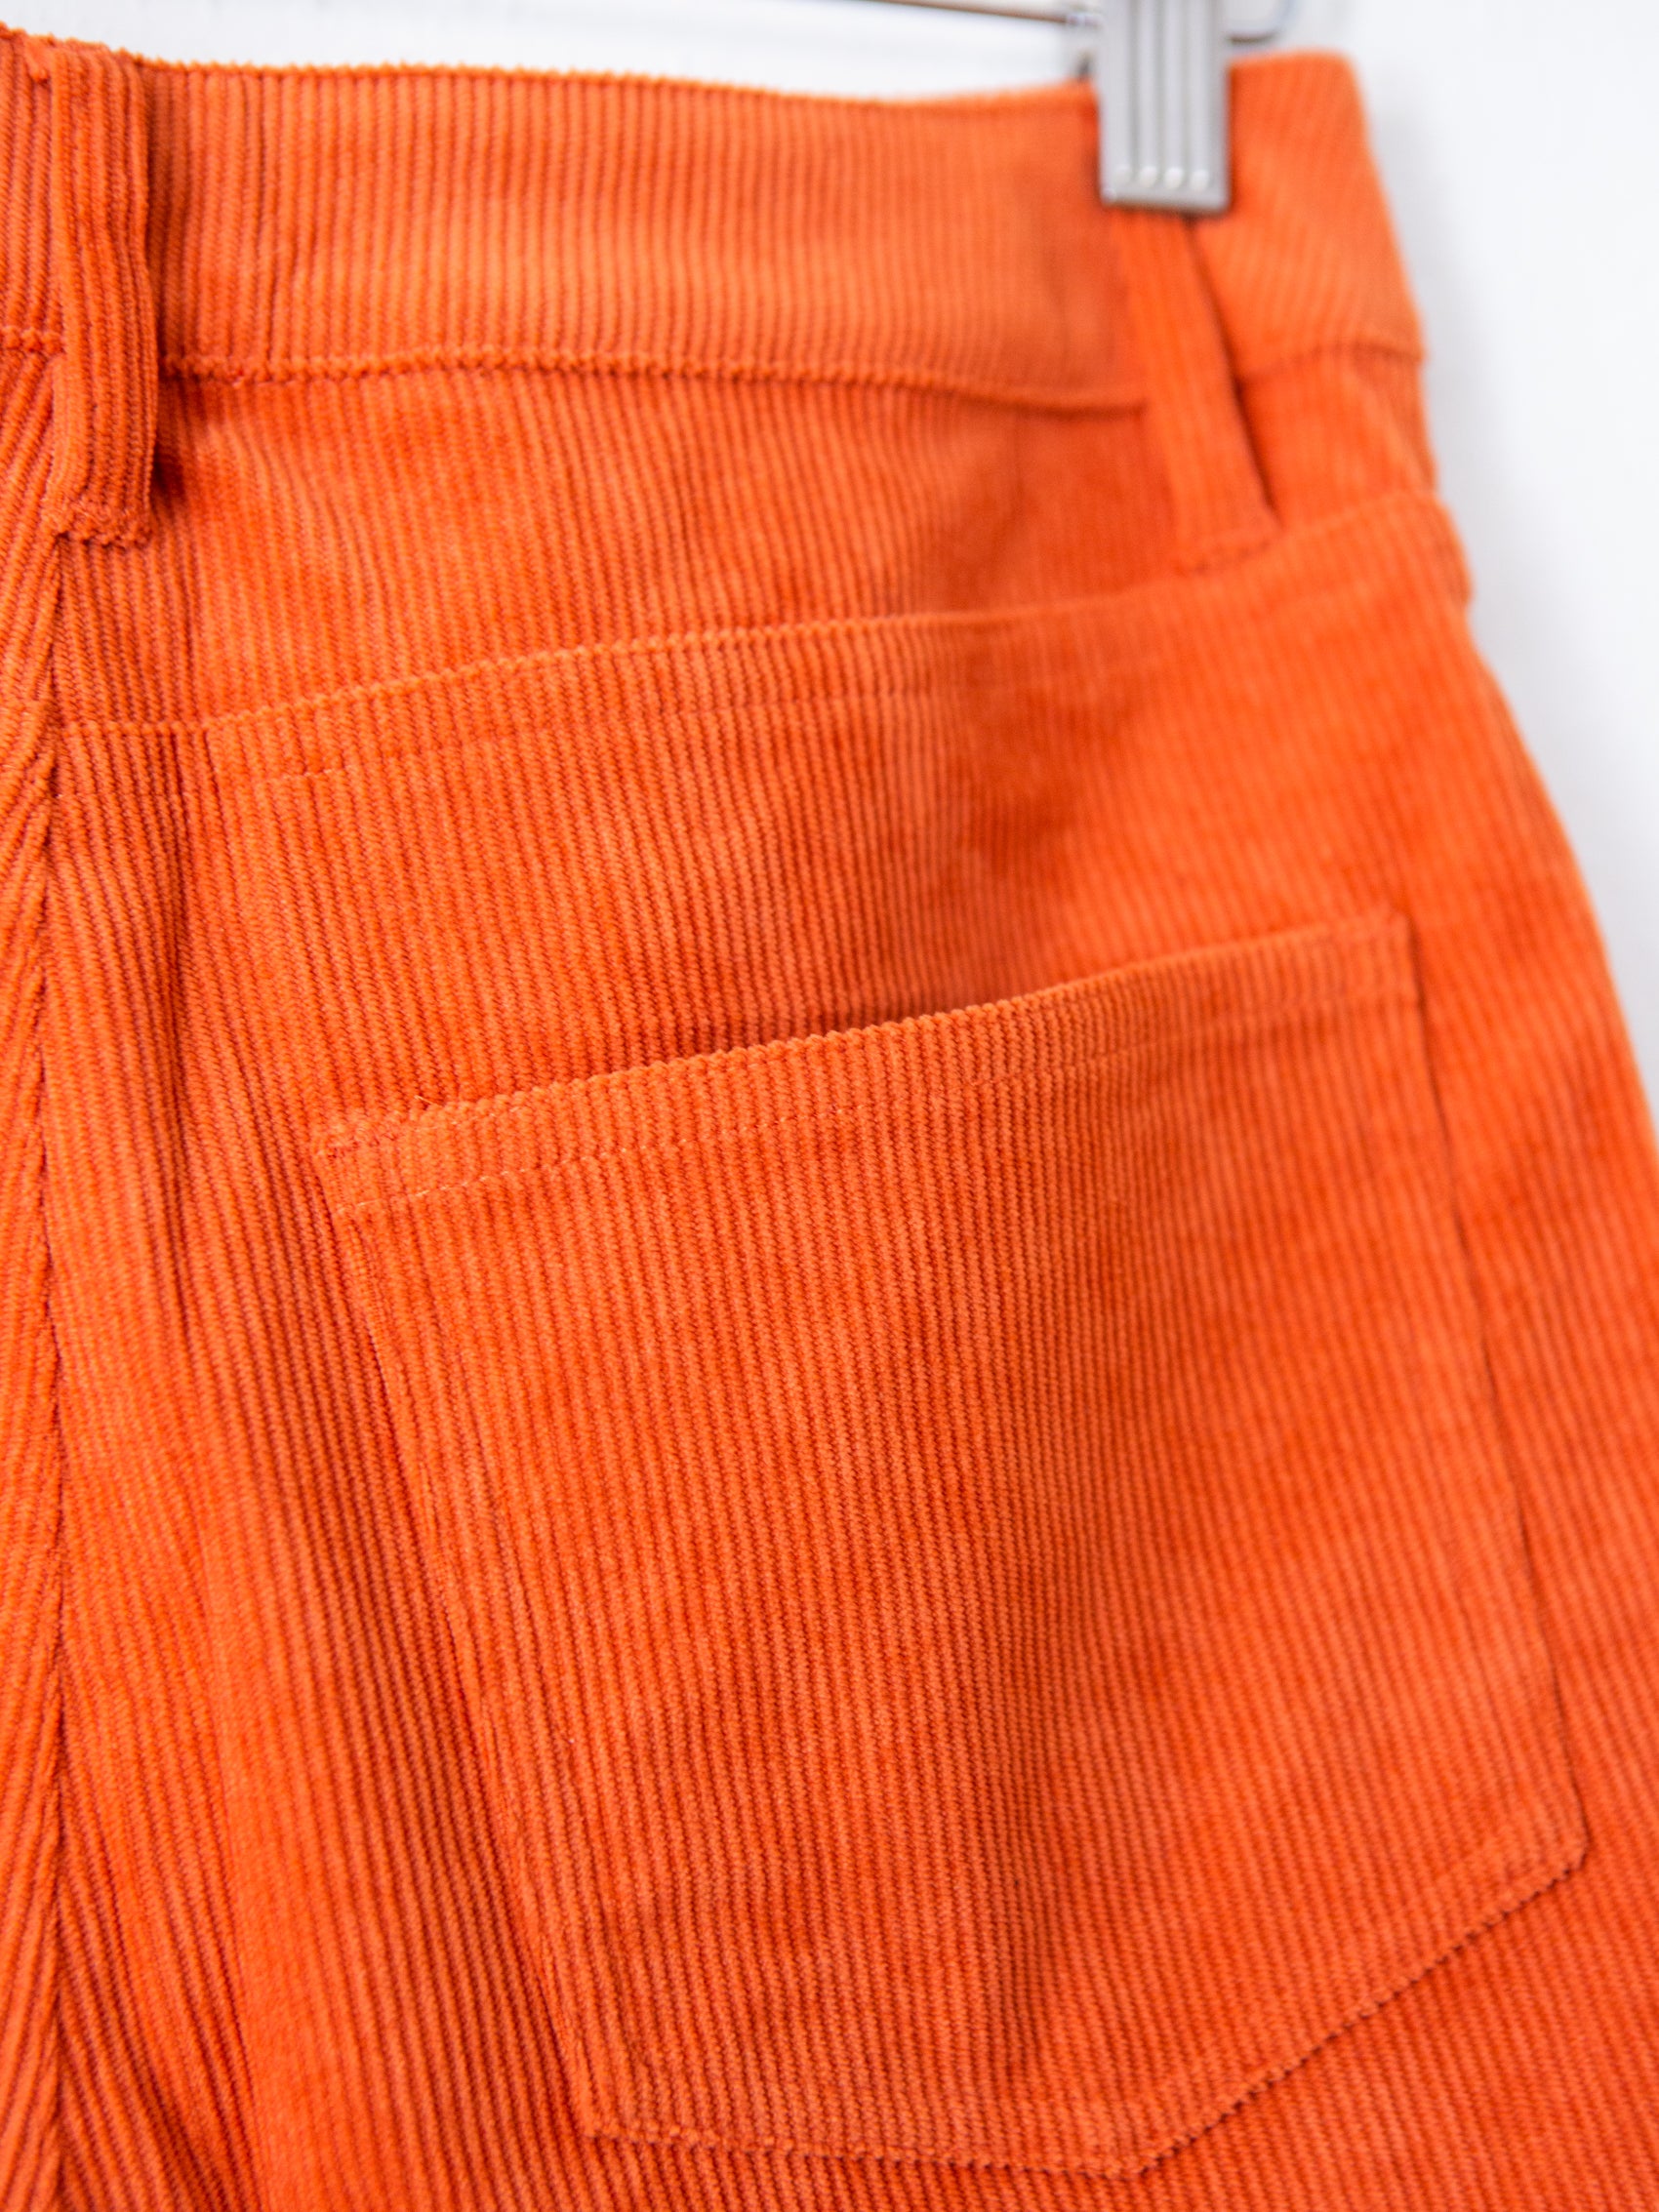 Orange Corduroy Pants Womens Fashion Bottoms Jeans  Leggings on  Carousell